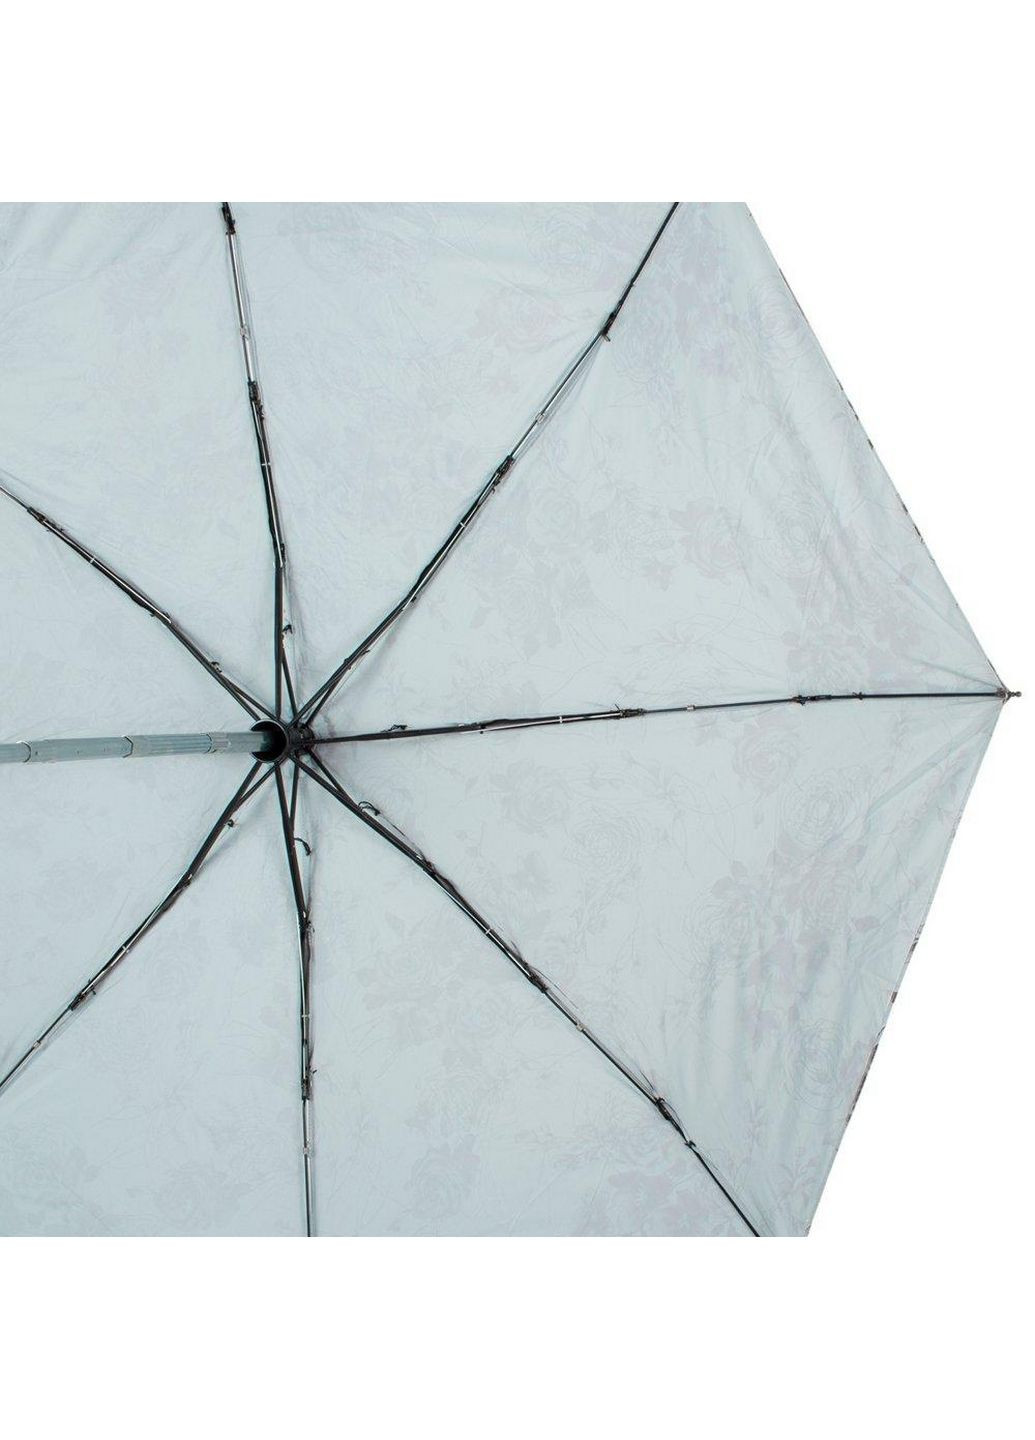 Жіноча складна парасолька автомат Zest (282594501)